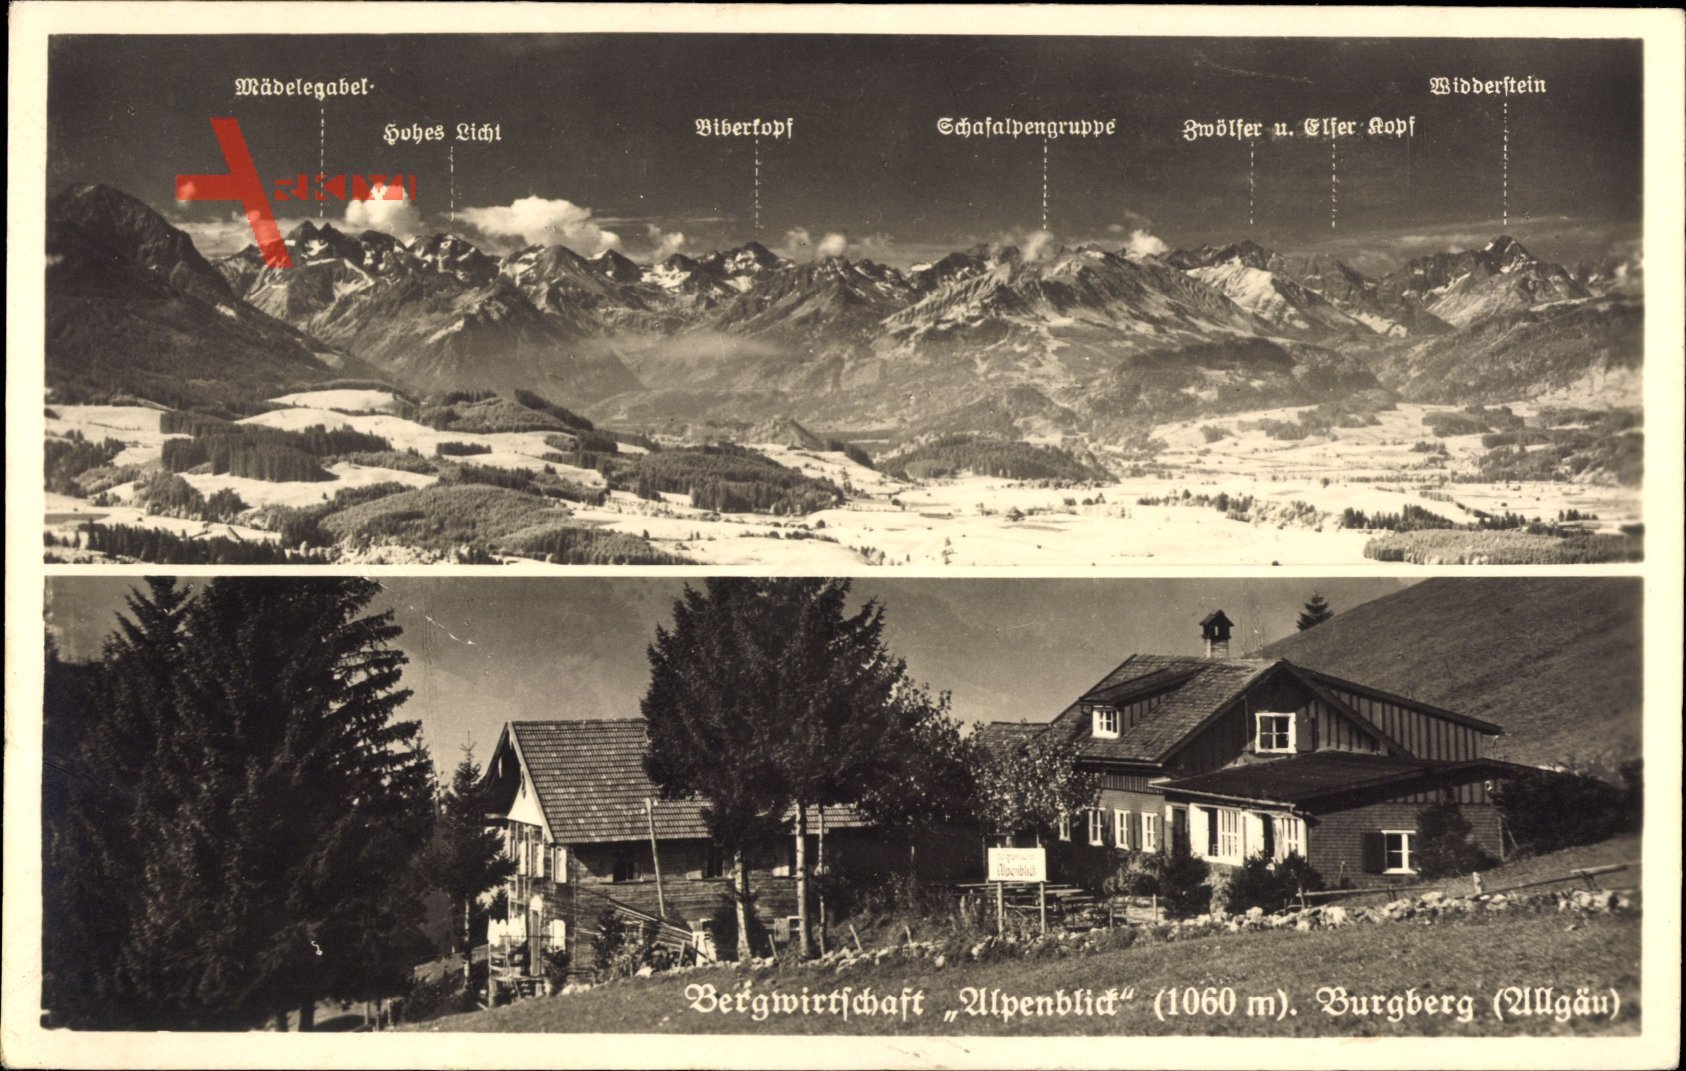 Burgberg im Allgäu, Bergwirtschaft Alpenblick, Alpenpanorama